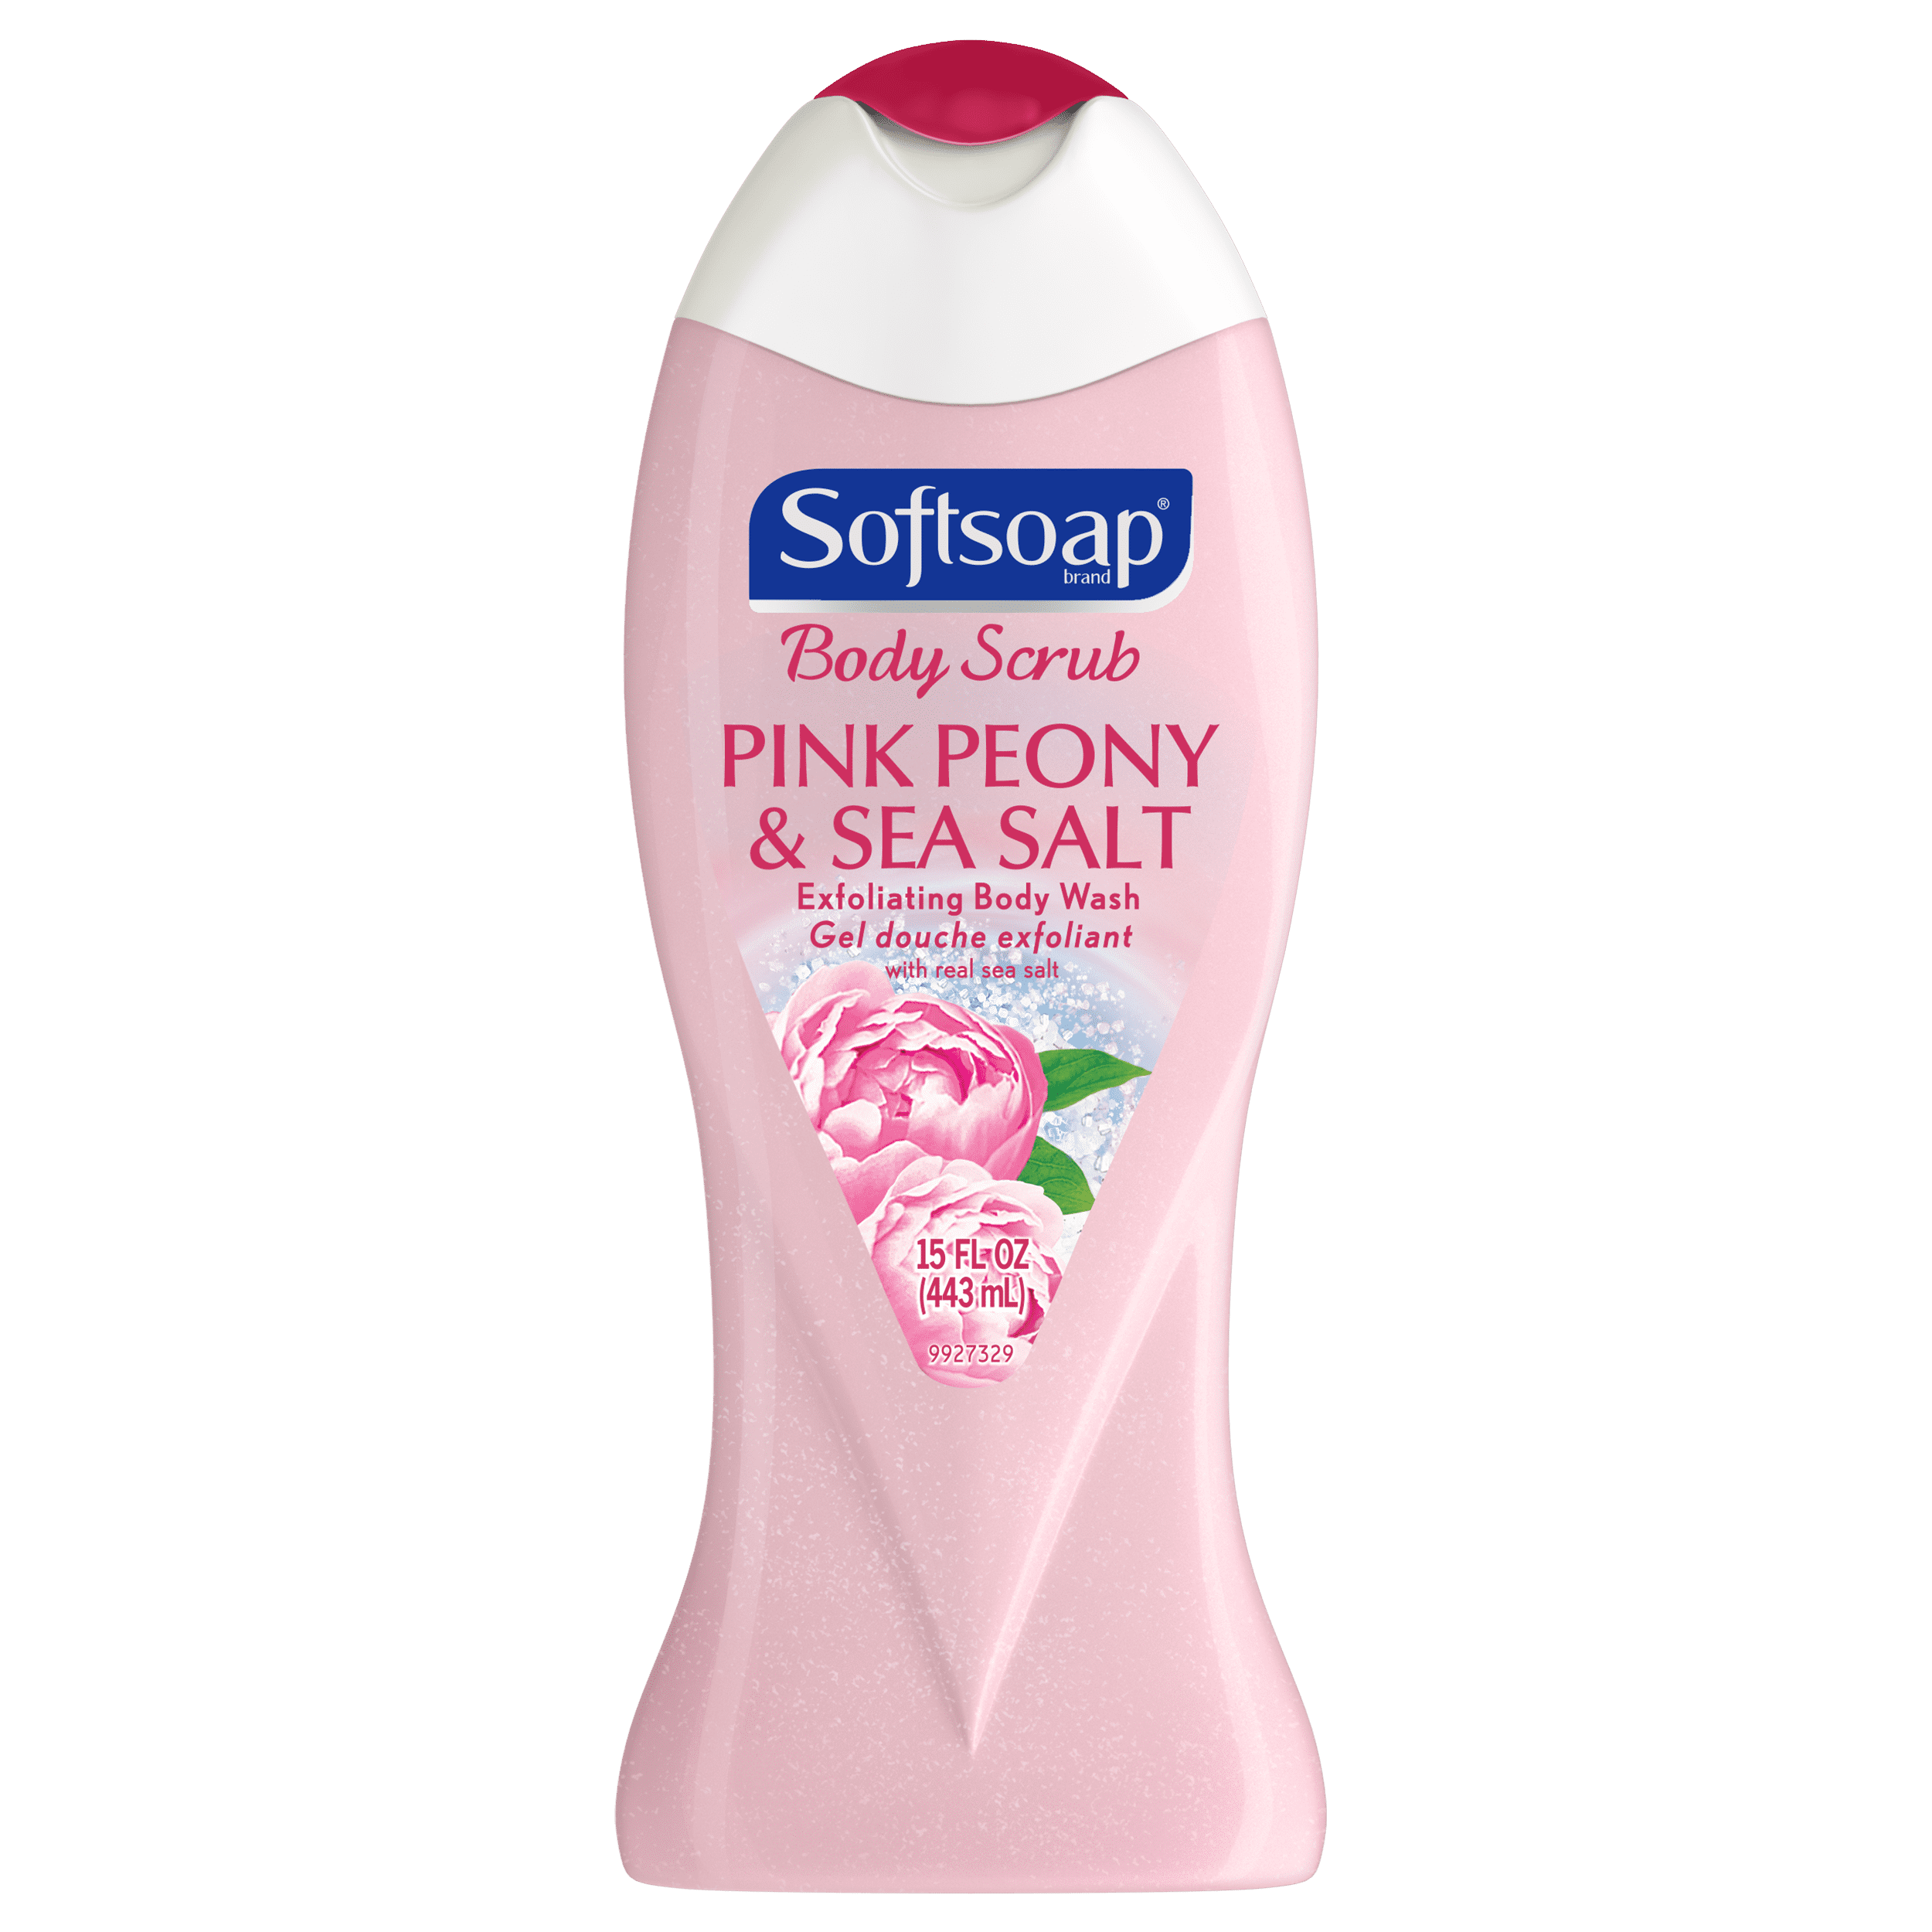 Softsoap Exfoliating Body Wash, Pink Peony & Sea Salt 15